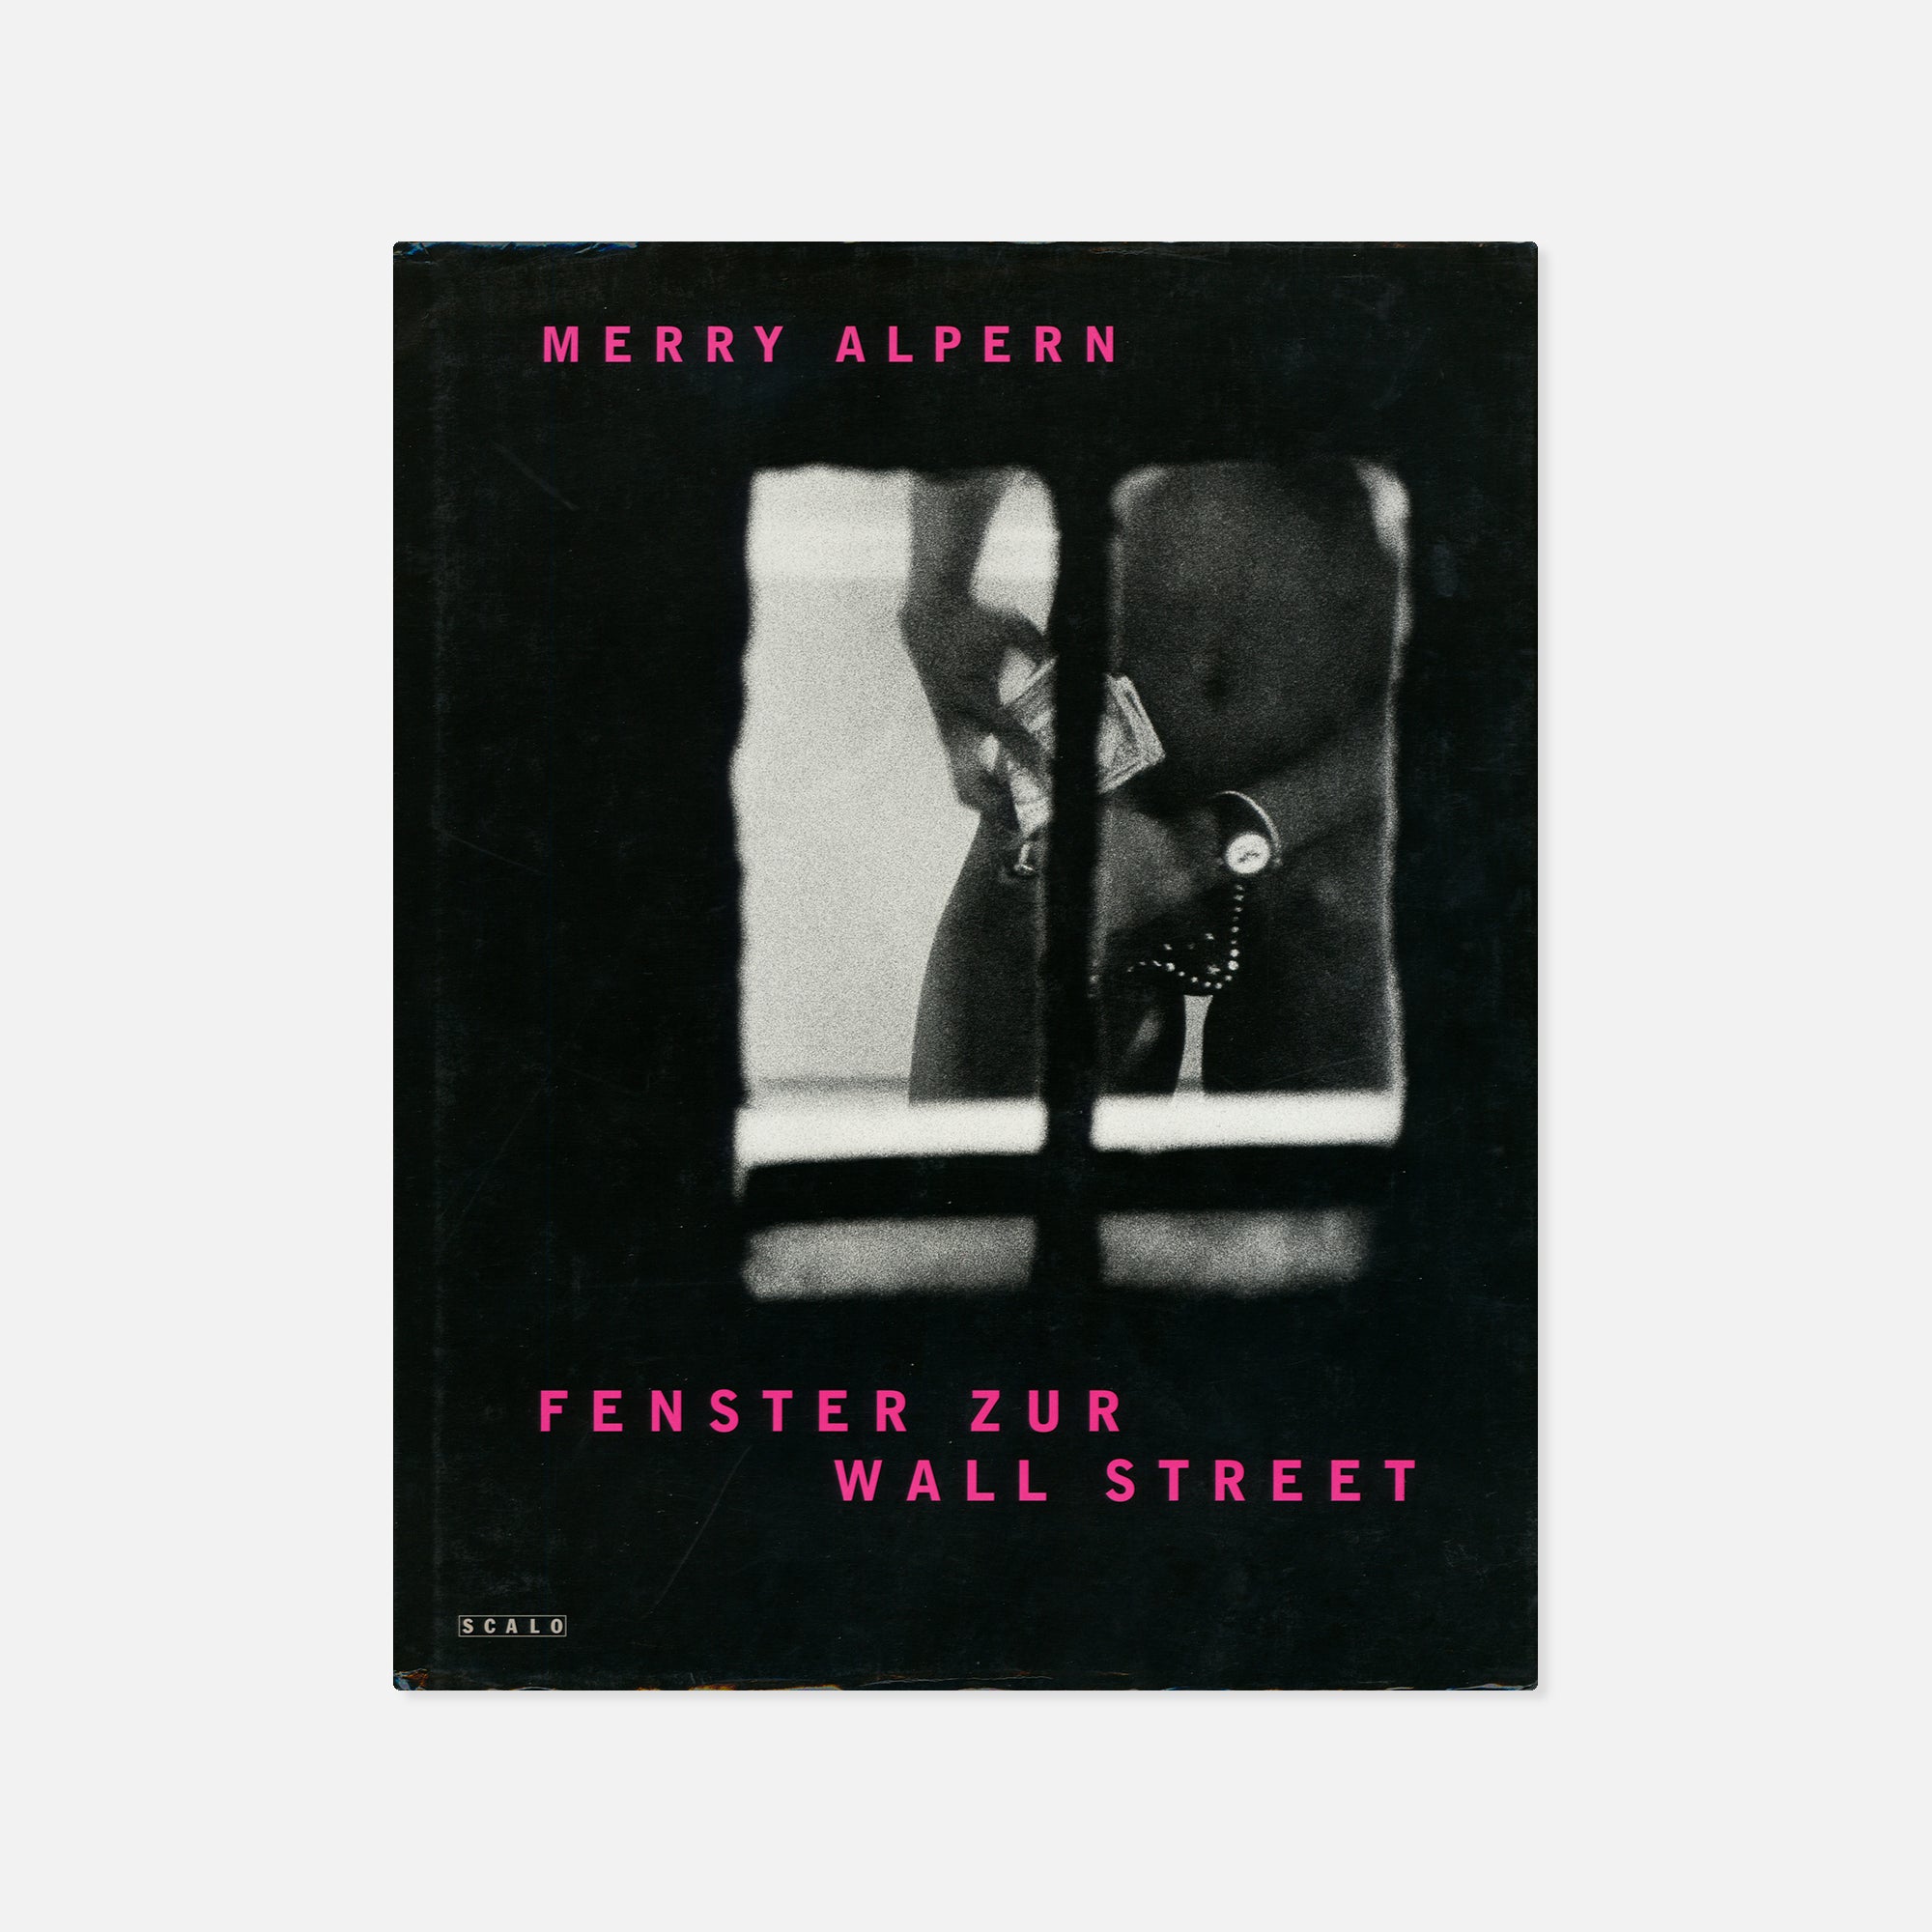 Merry Alpern — Fenster zur Wall Street (Dirty Windows)